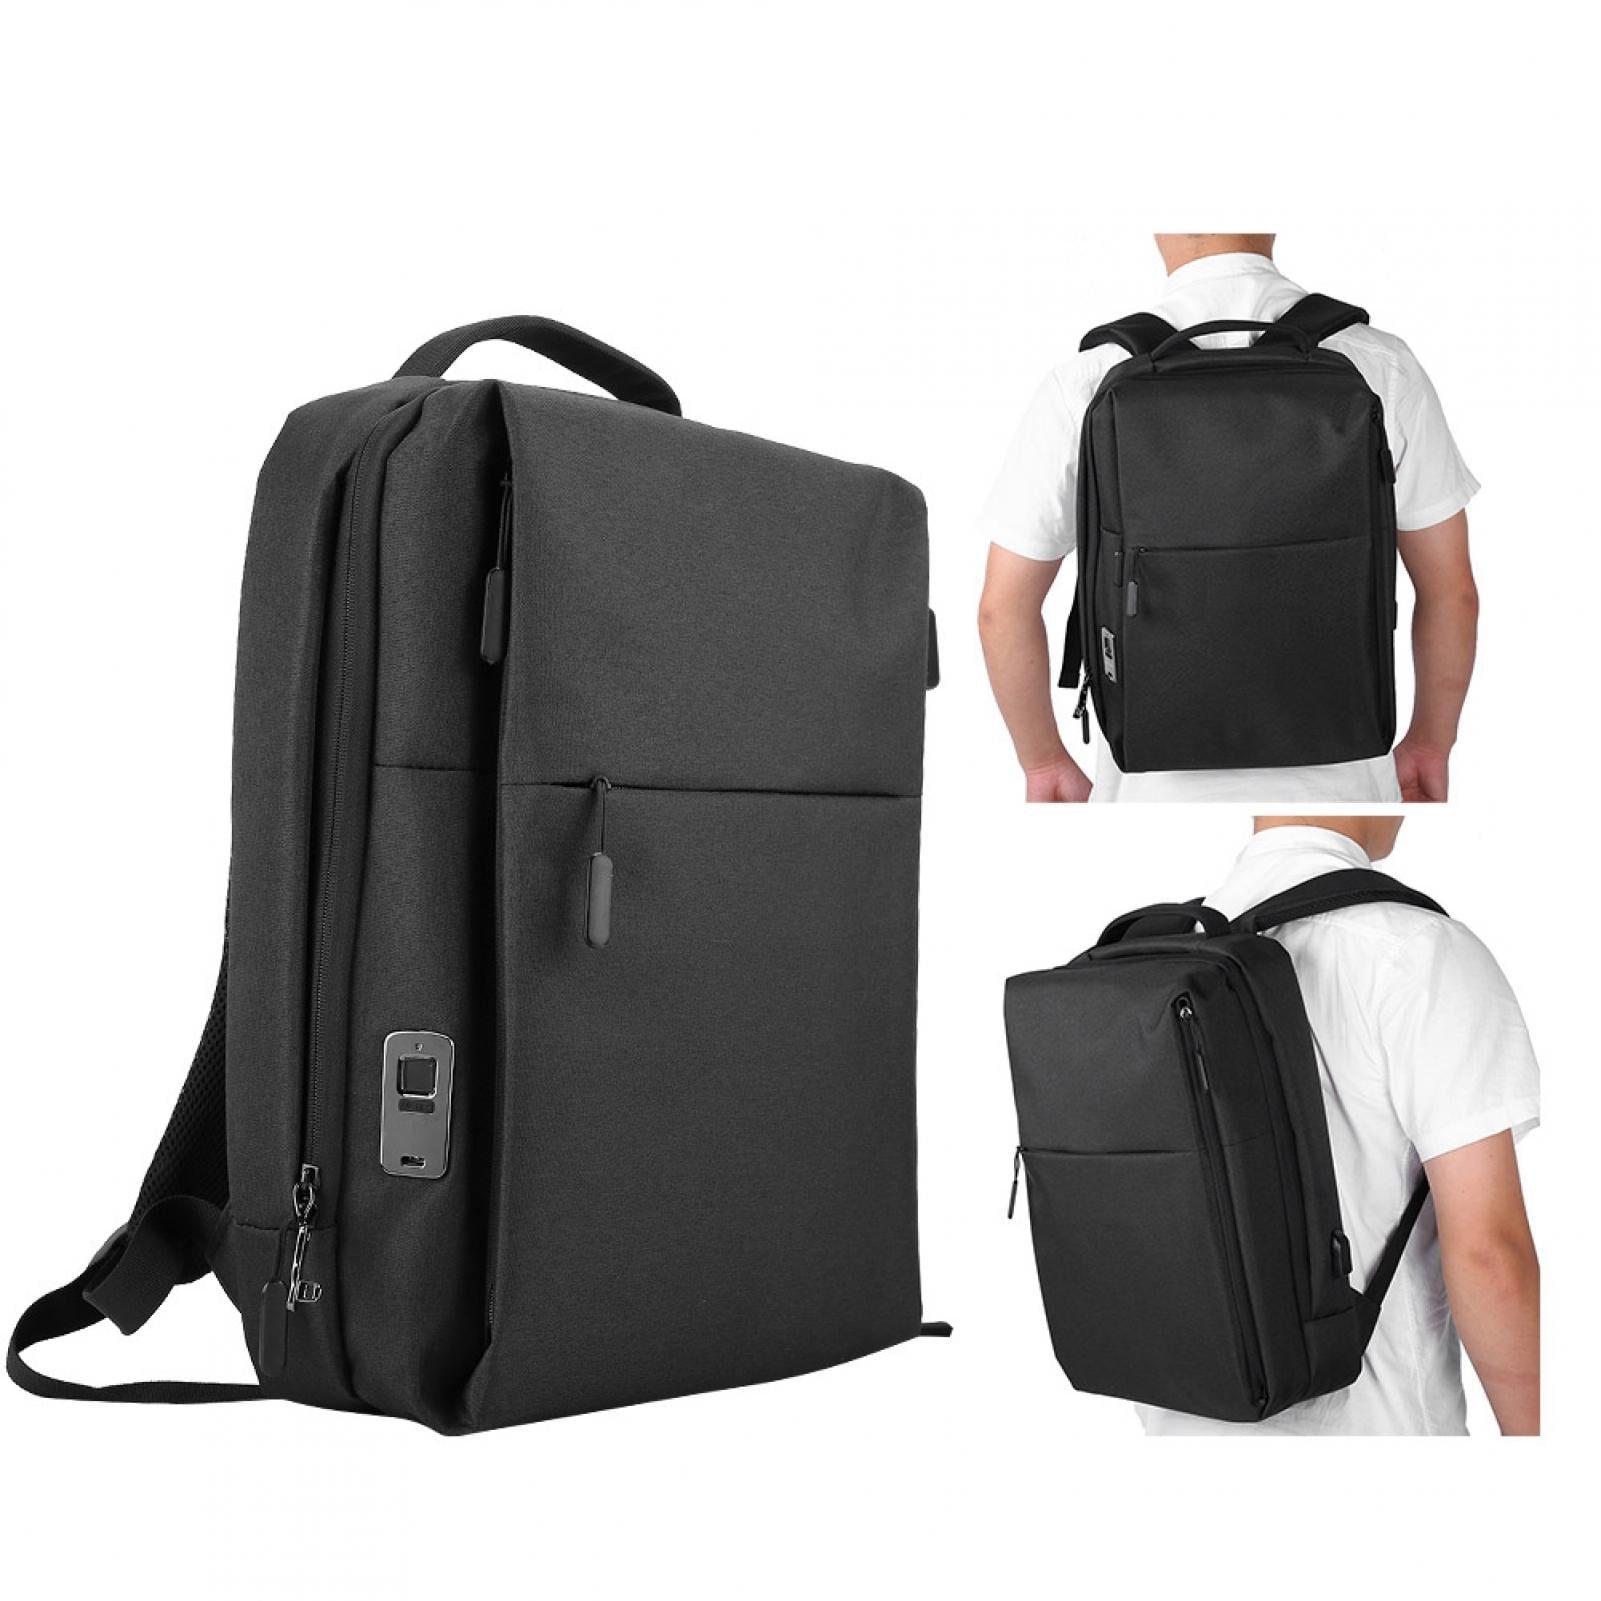 Color : Gray Anti Theft Business Backpack RRH Laptop Backpack Sports Backpack Men's Backpack Work Bag Lightweight Laptop Bag with USB Charging Port Fits 15.6 Inch Laptop